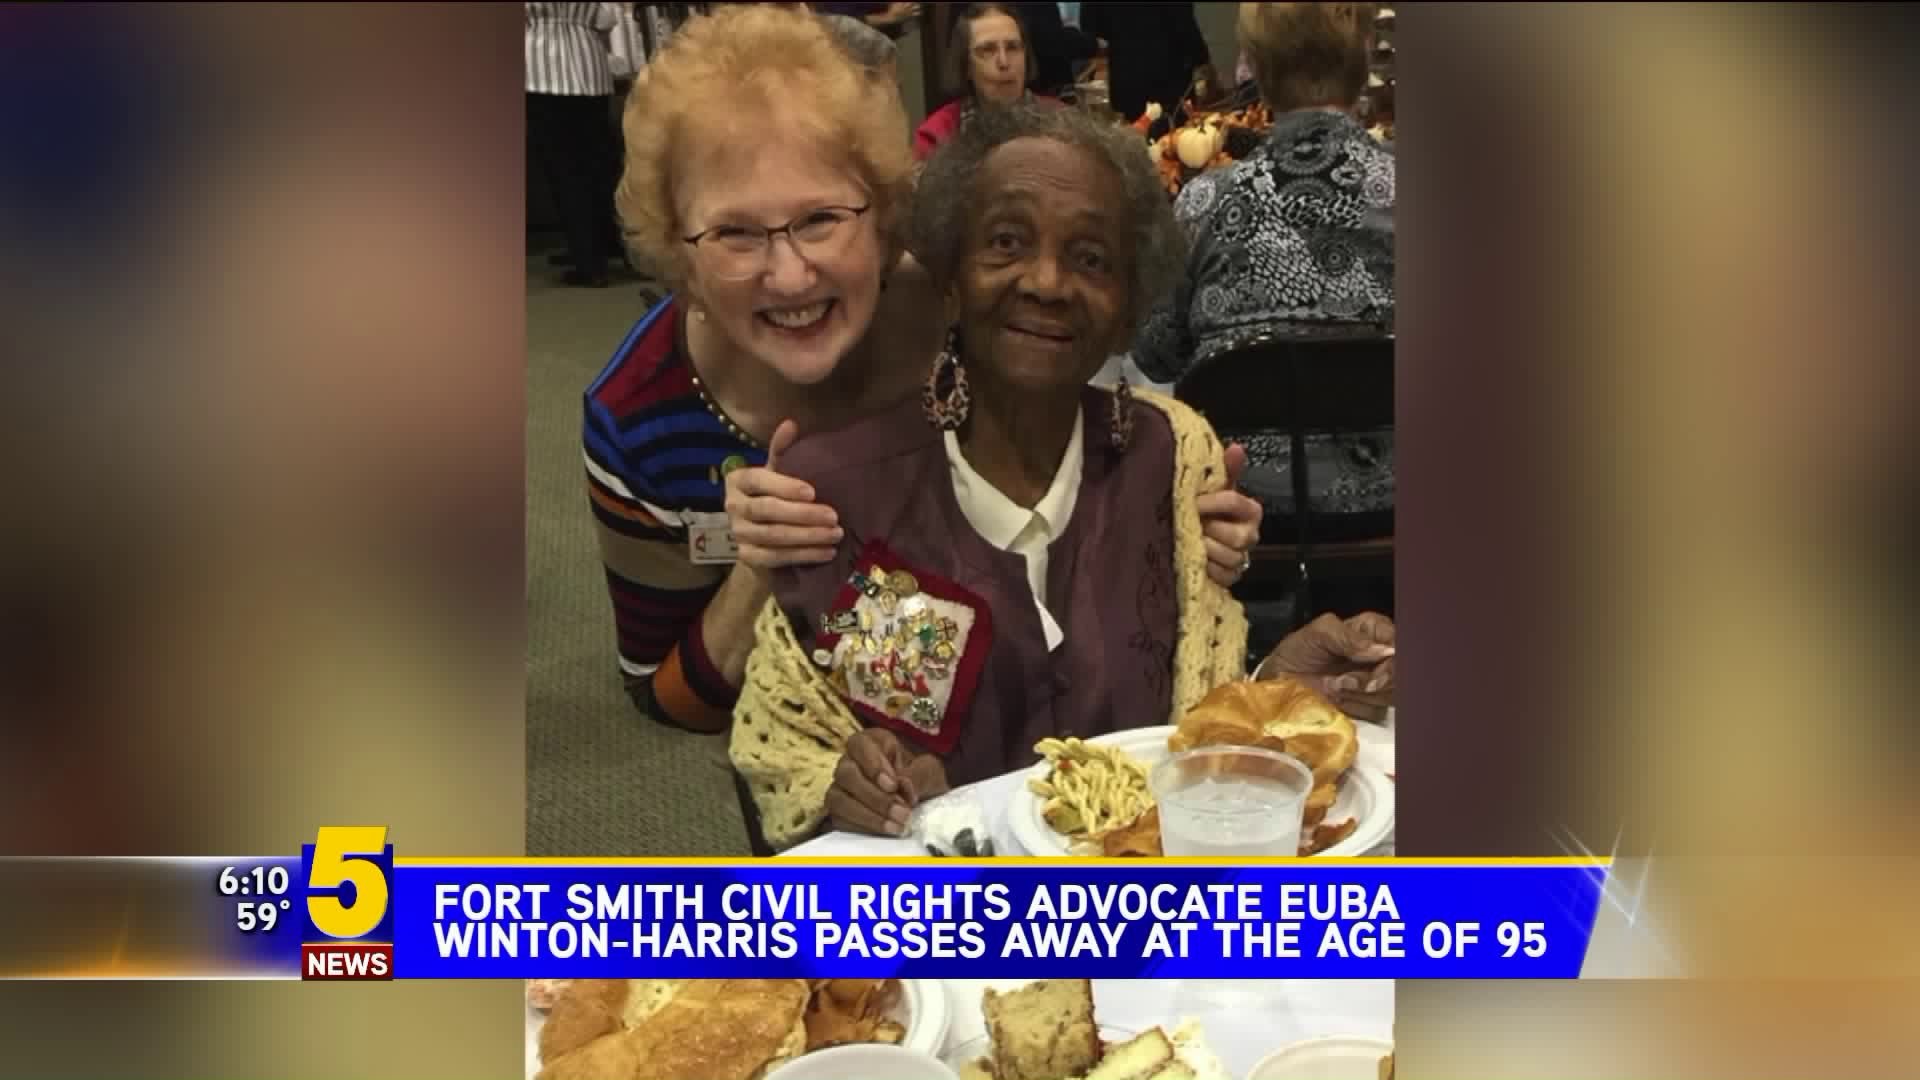 Fort Smith Civil Rights Advocate Euba Winton-Harris Dies